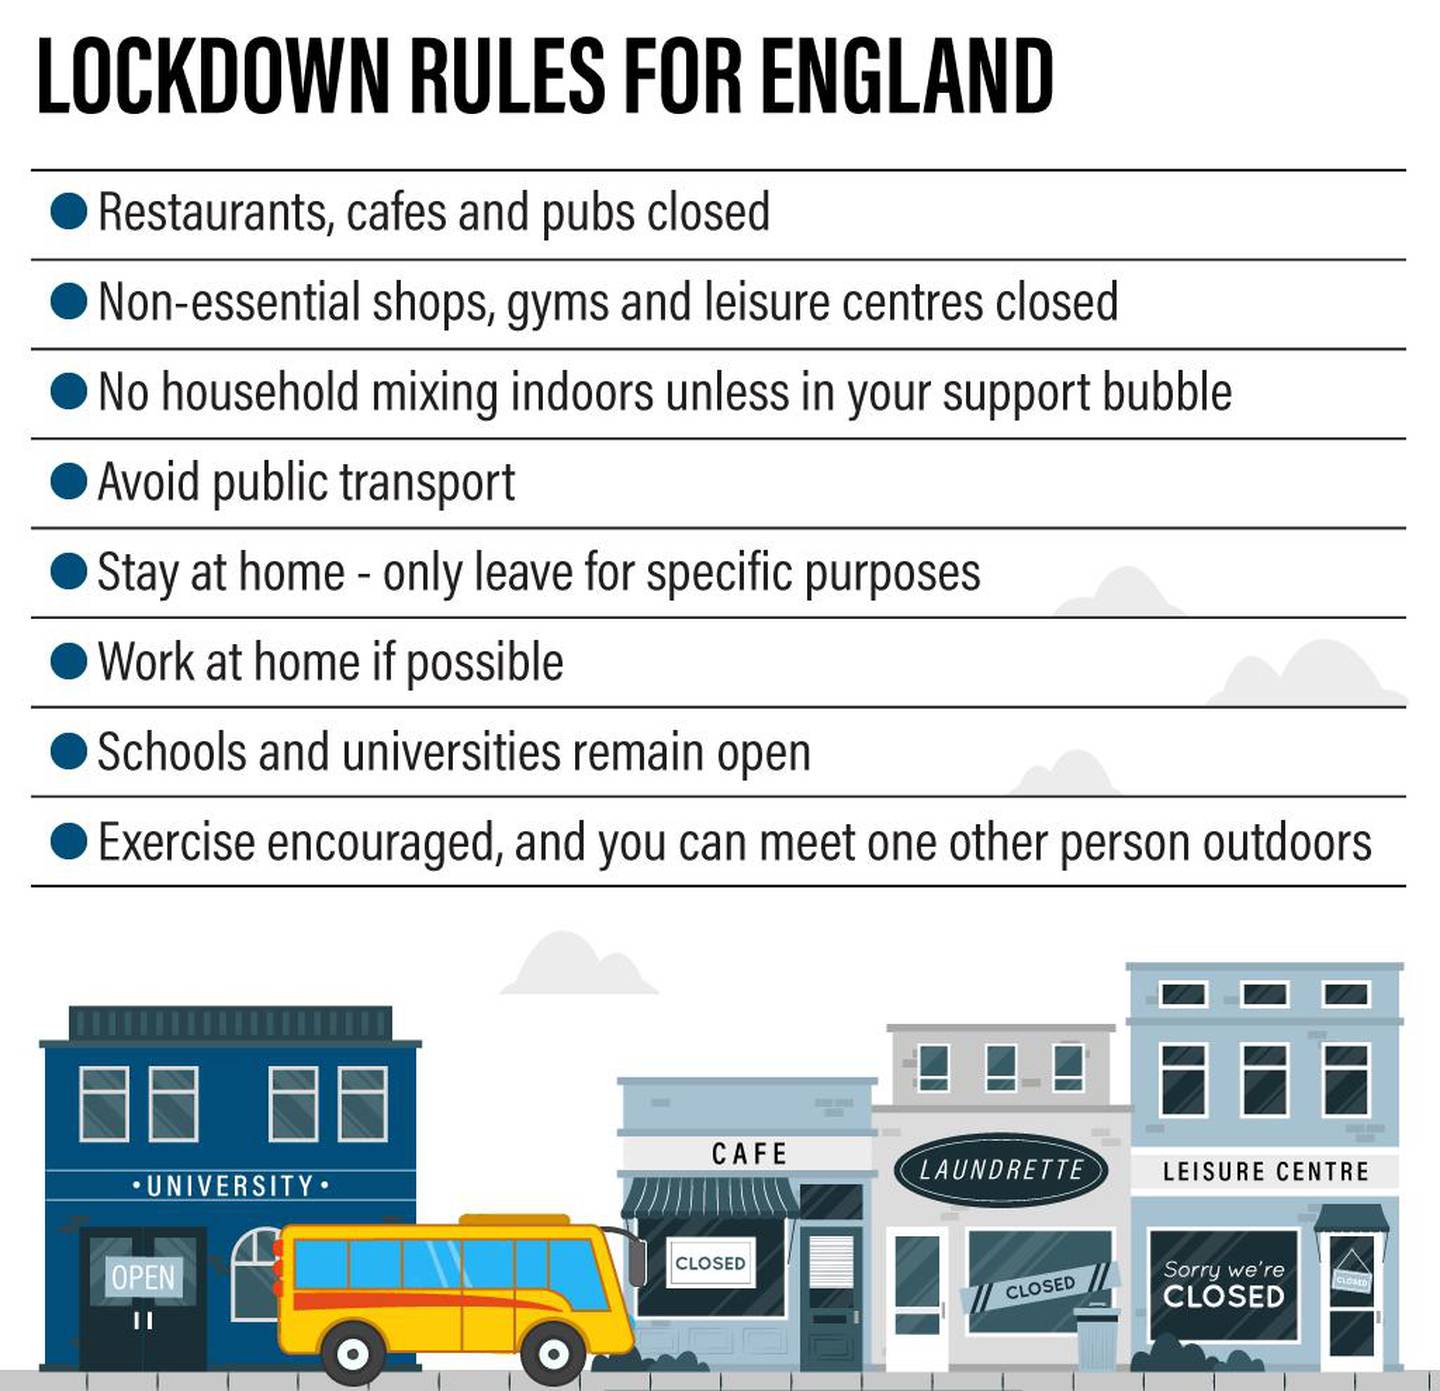 England's lockdown rules. 